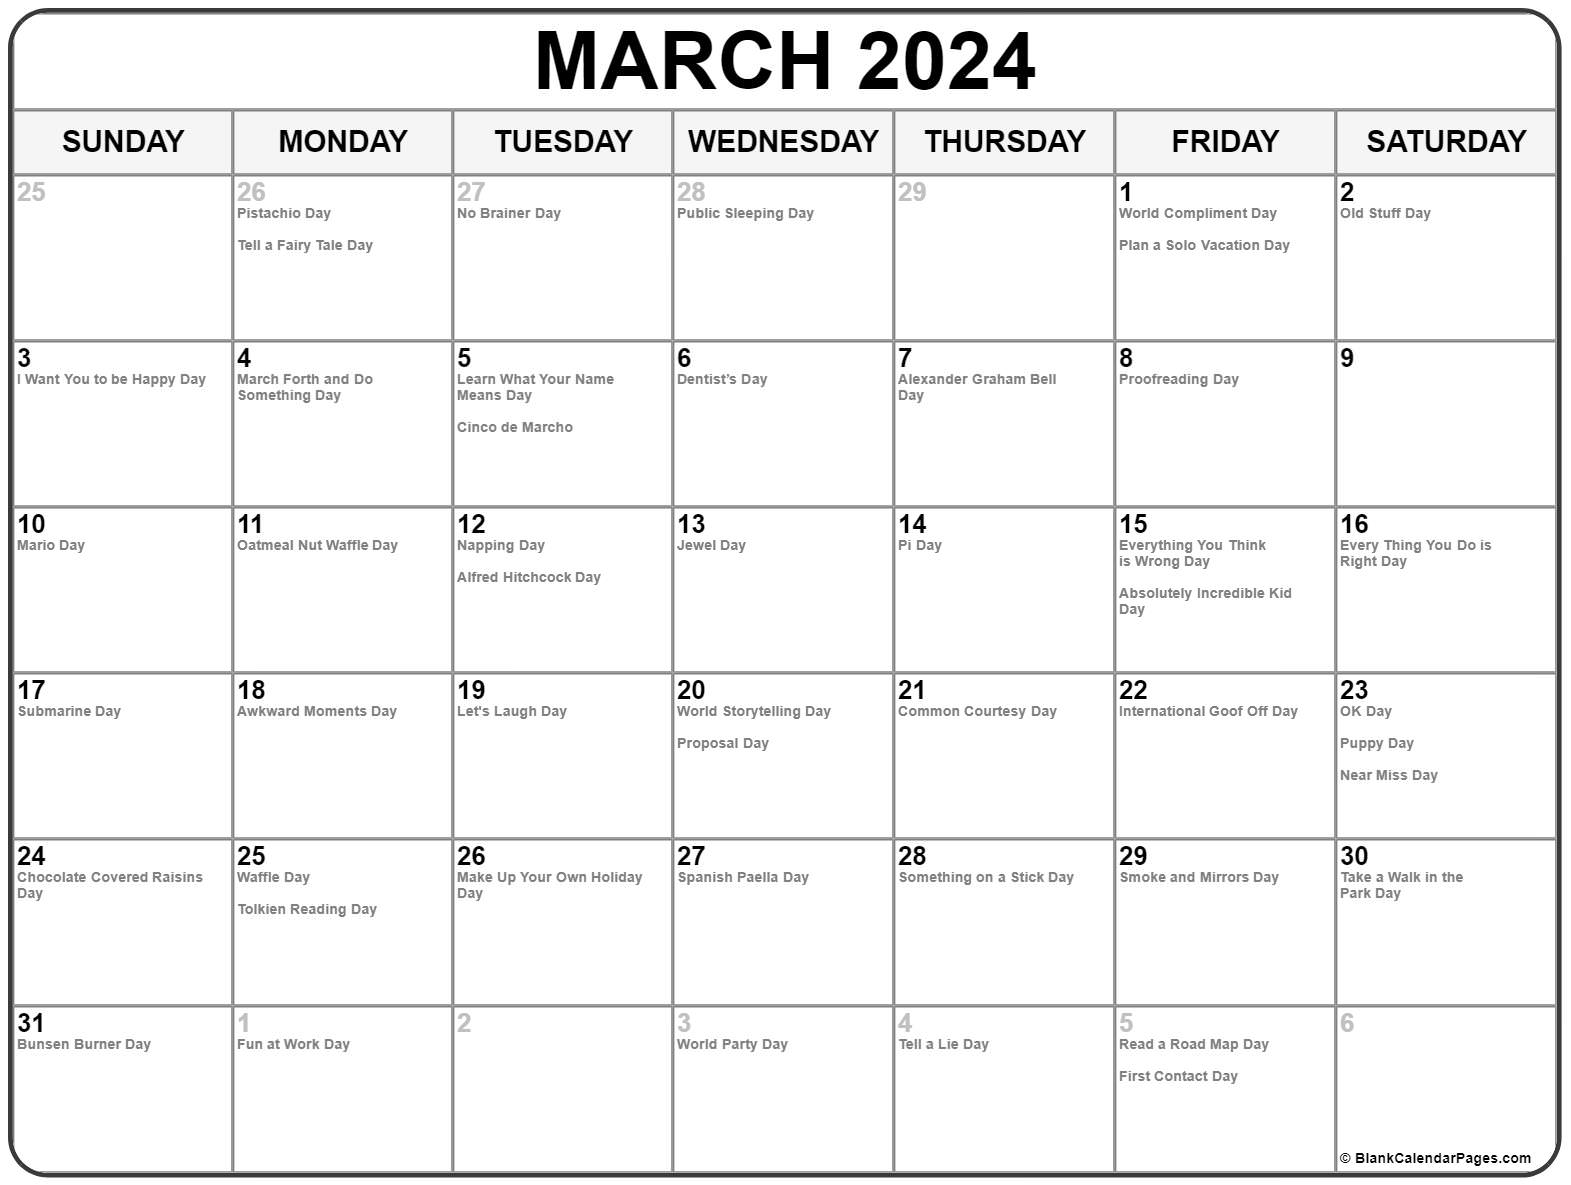 National Calendar Day March 2024 Chris Delcine